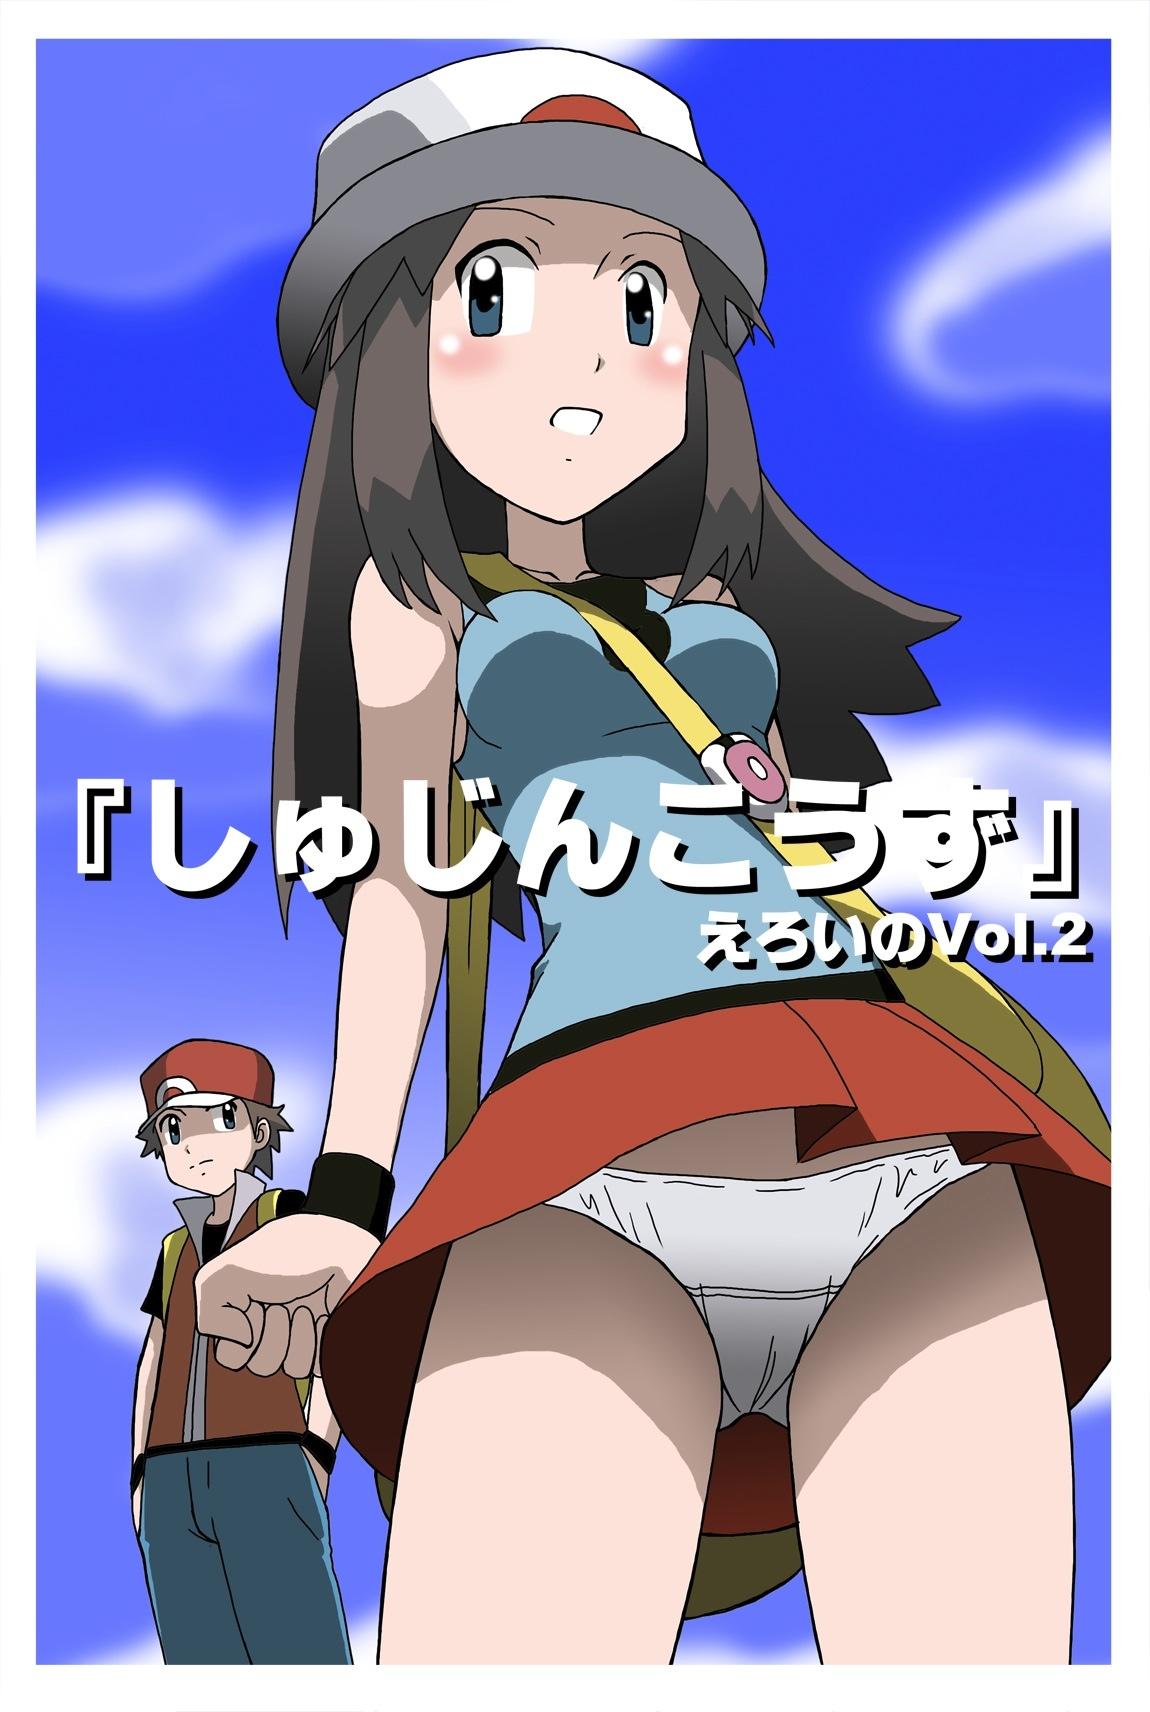 Rough 「Shujinkouzu」 Eroi no Vol.2 - Pokemon Free Amature Porn - Picture 1